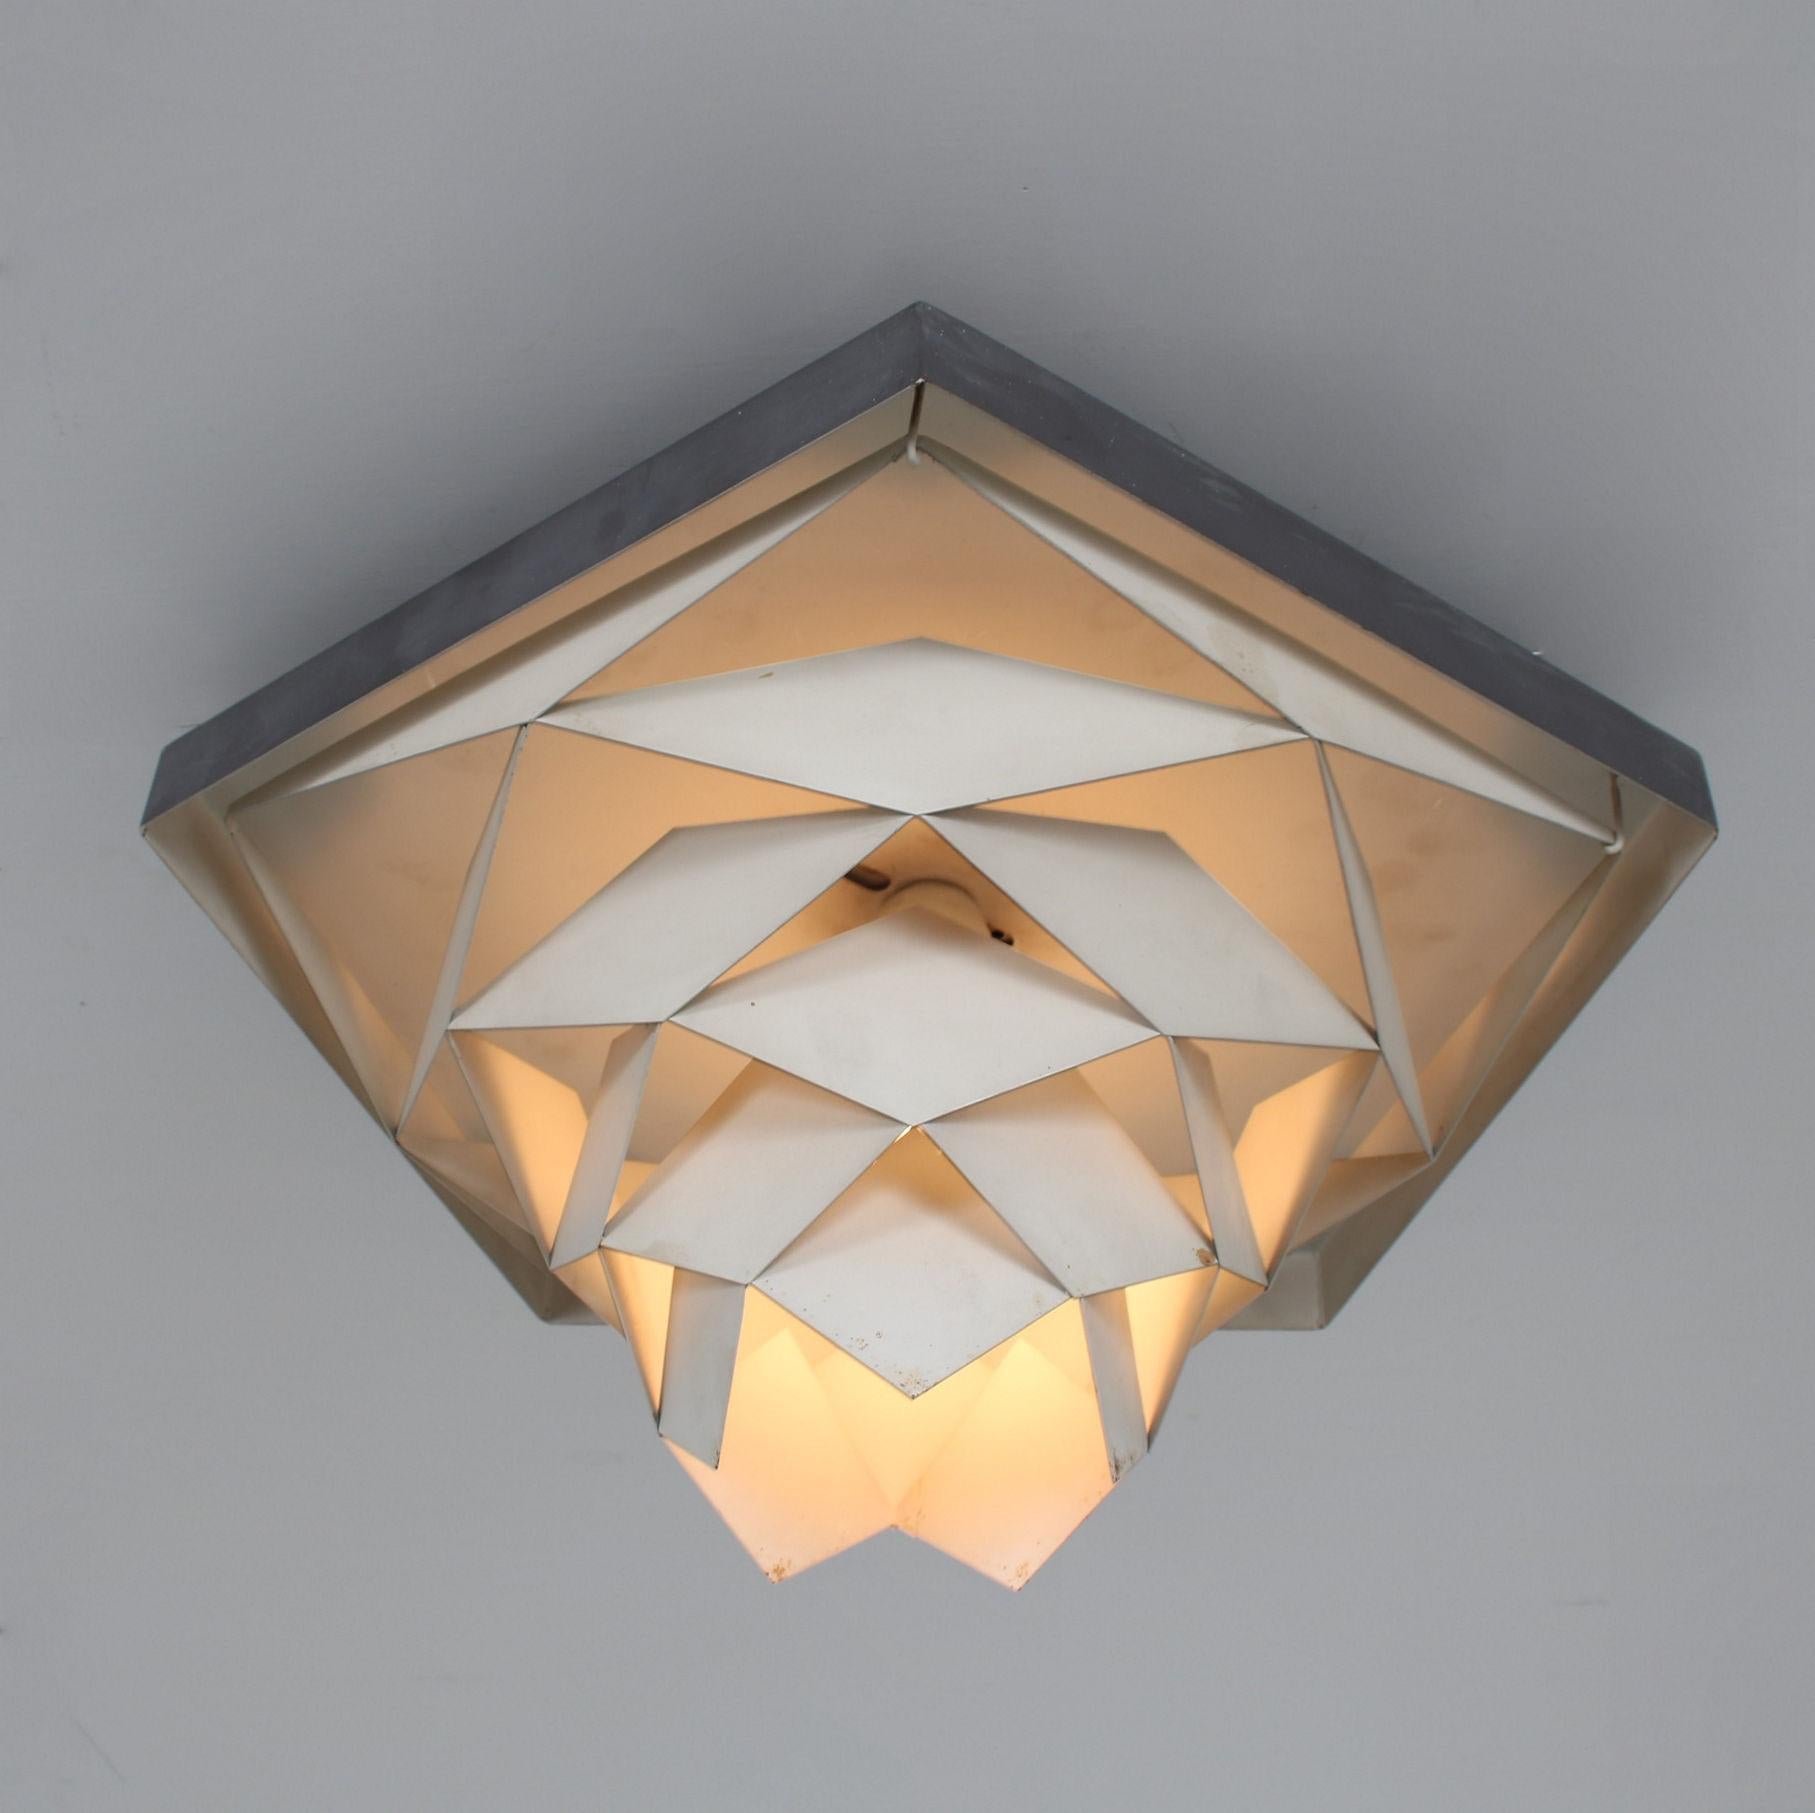 Danish “Sympfoni” Ceiling Lamp by Preben Dahl for Hans Folsgaard, Denmark 1960 For Sale